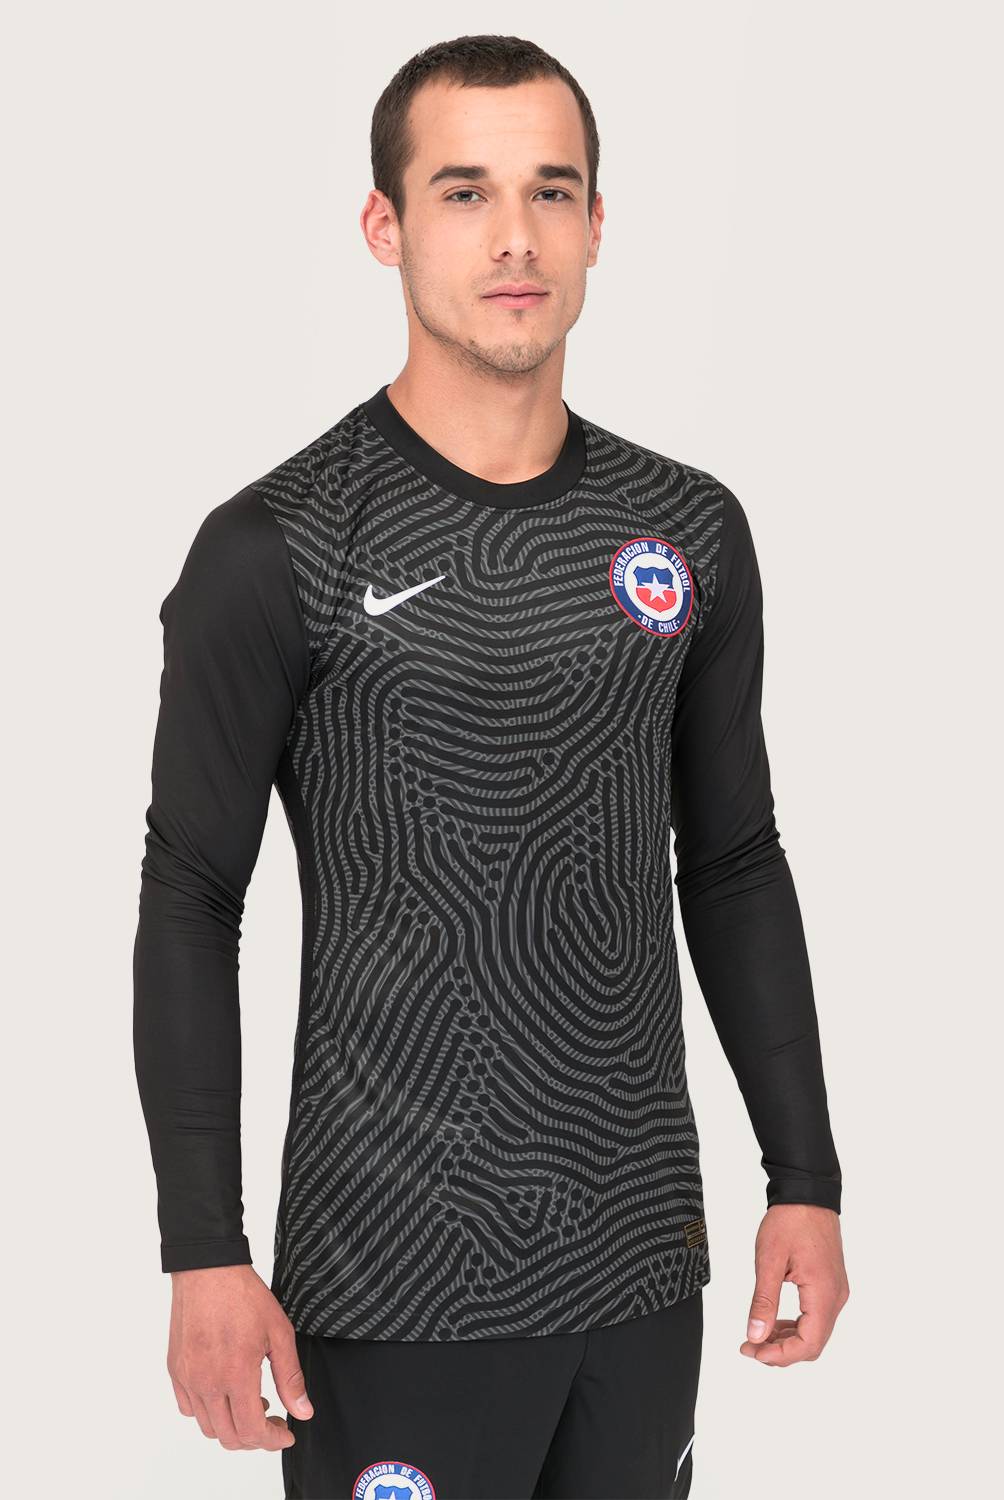 NIKE - Camiseta Chile Hombre Arquero Fútbol